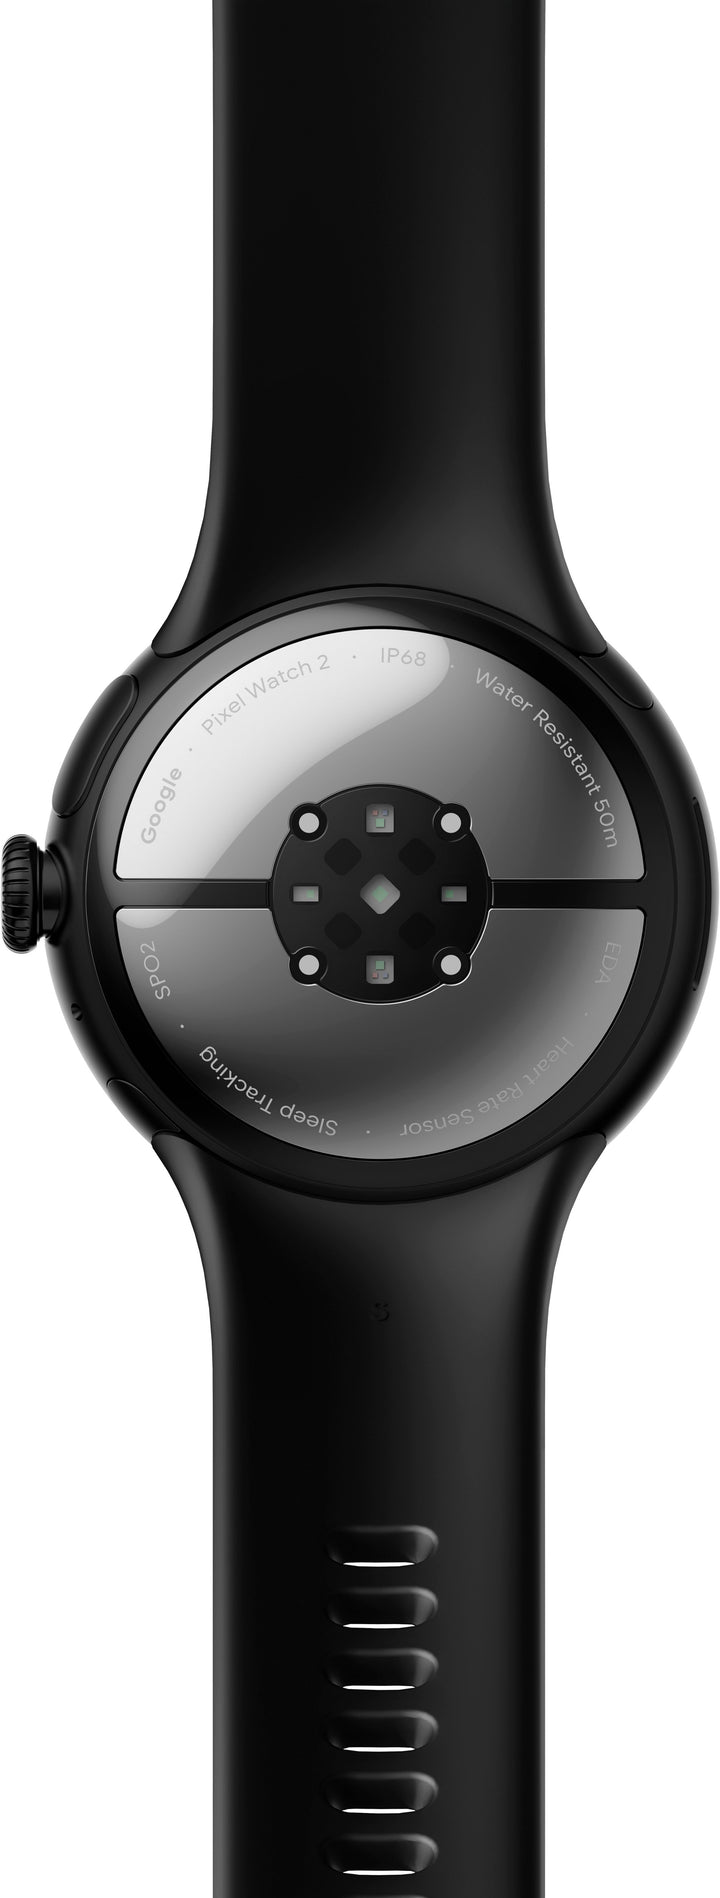 Google - Pixel Watch 2 Matte Black Smartwatch with Obsidian Active Band LTE - Matte Black_5